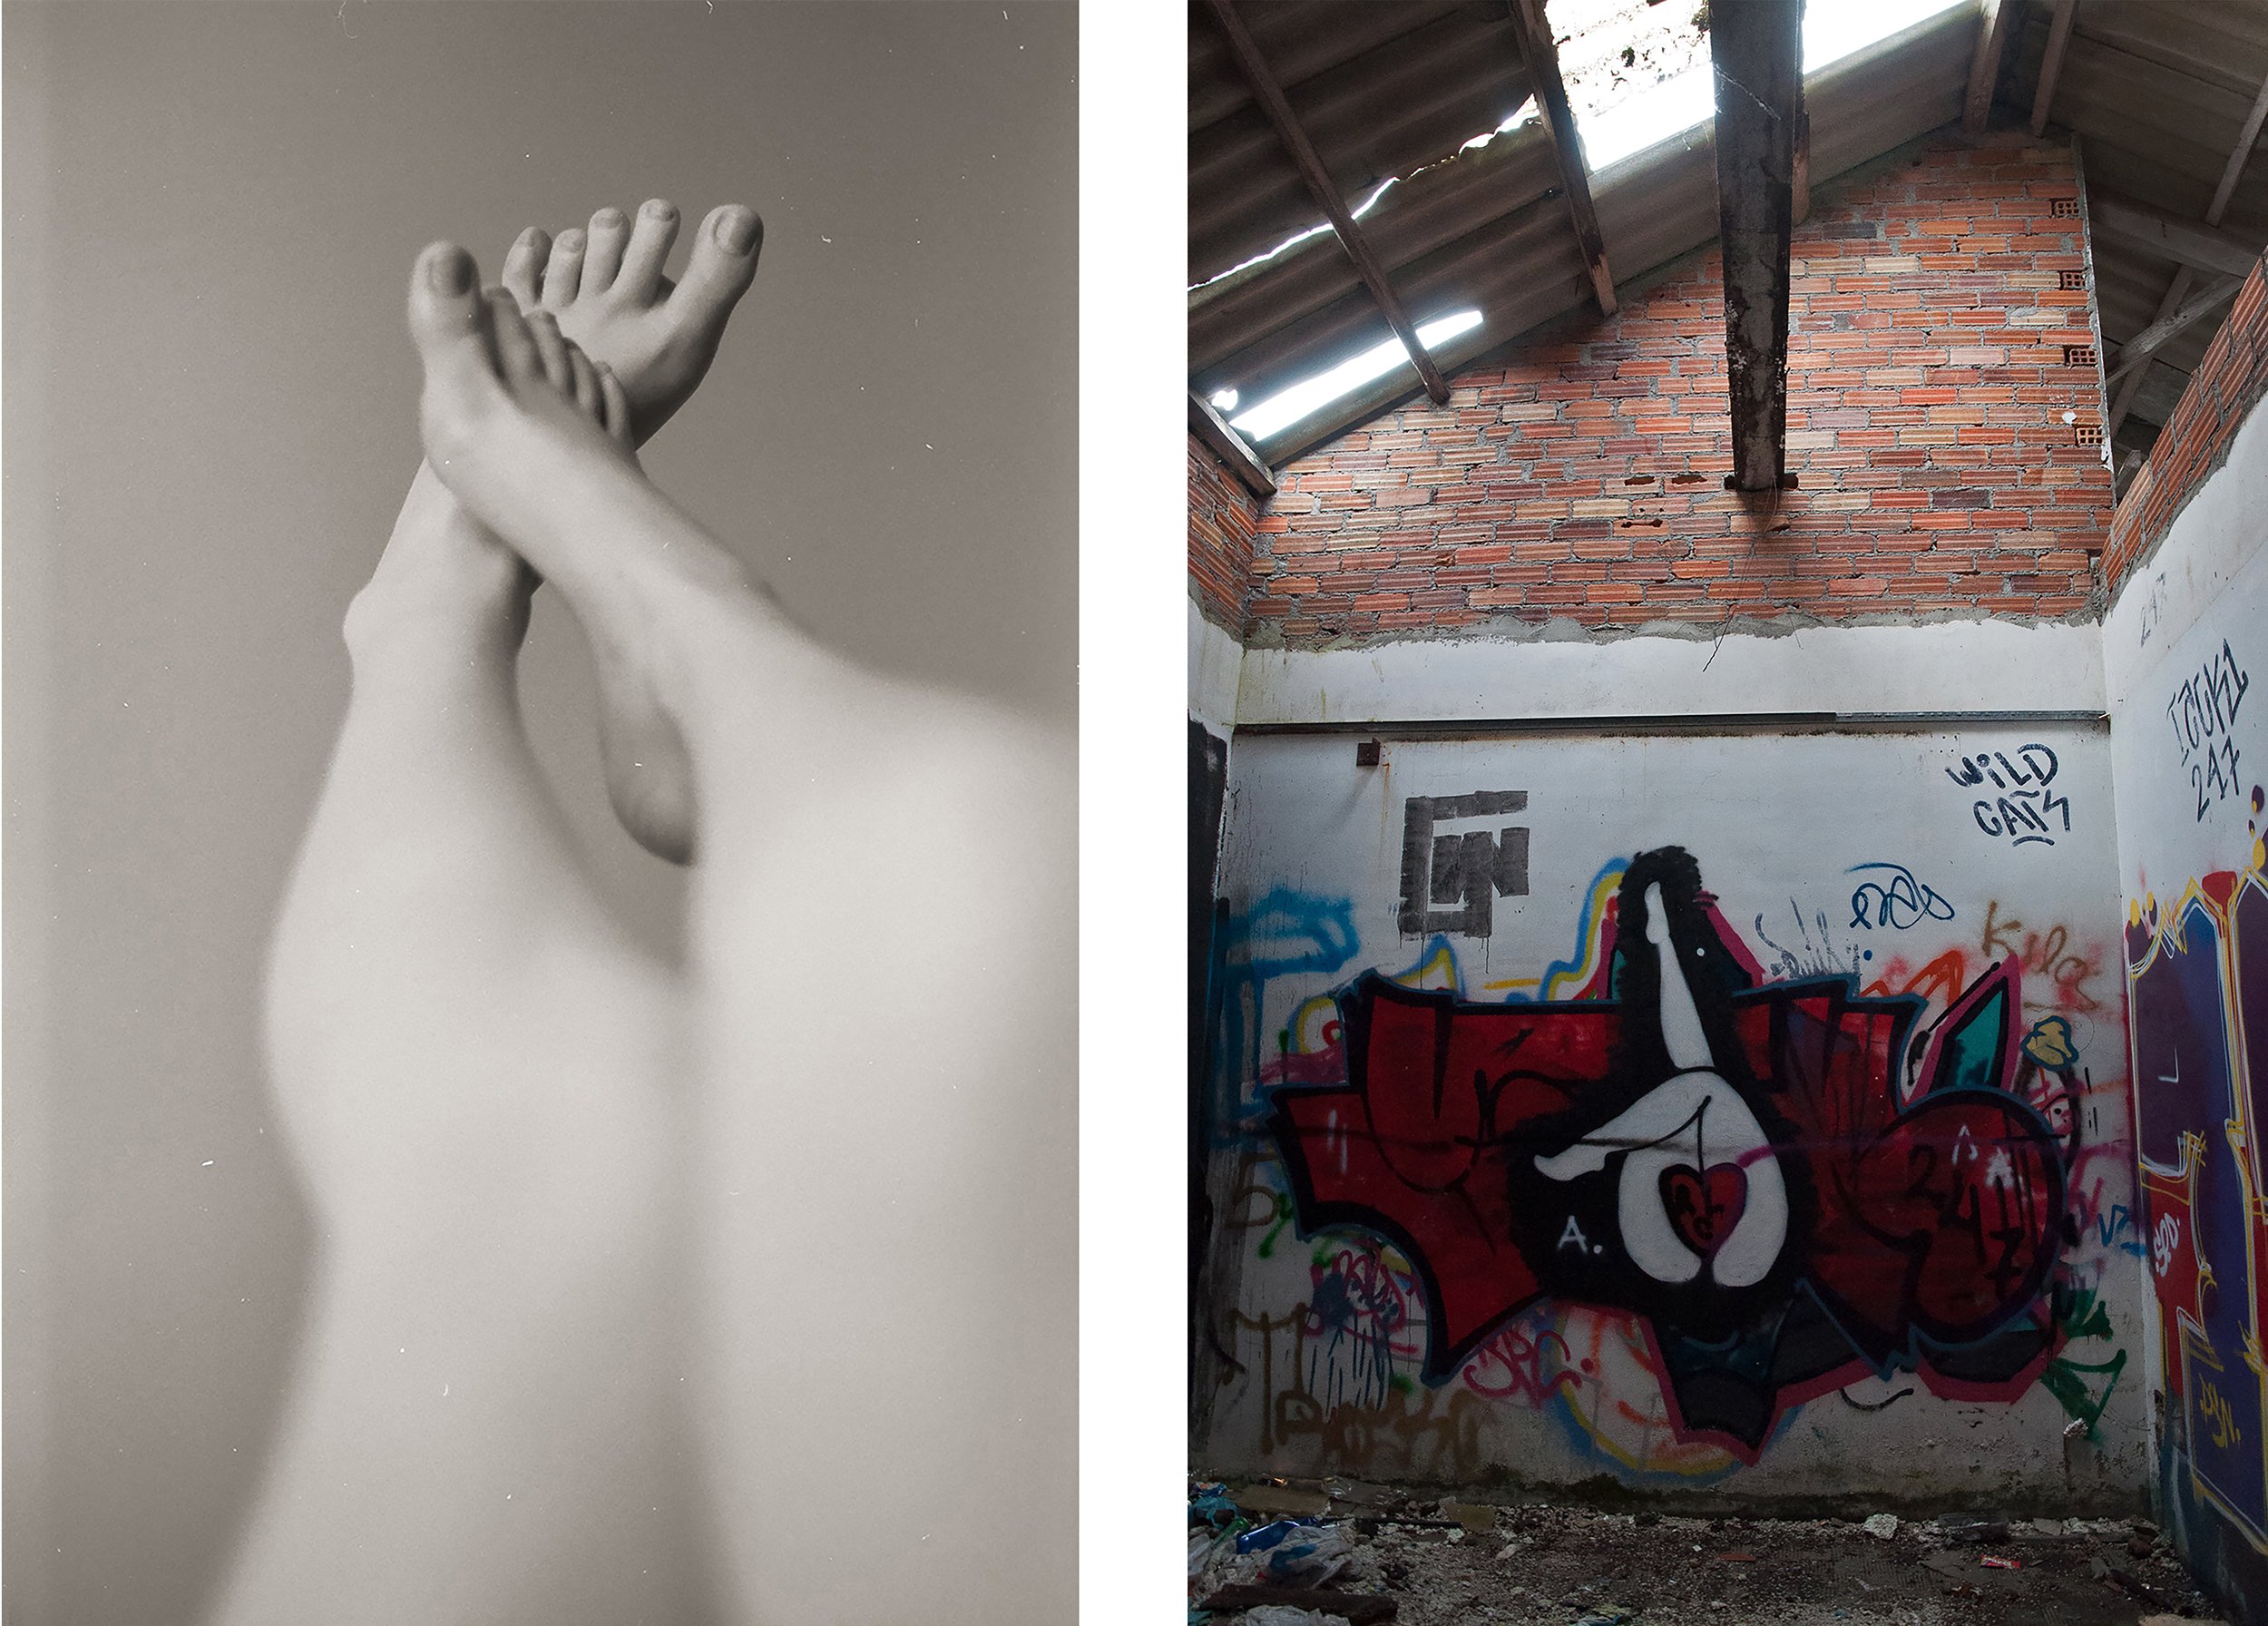   My Legs.  Brooklyn, NY. 2020.   Abandoned Whaling Factory Graffiti I.  Cangas, Spain. 2018. 